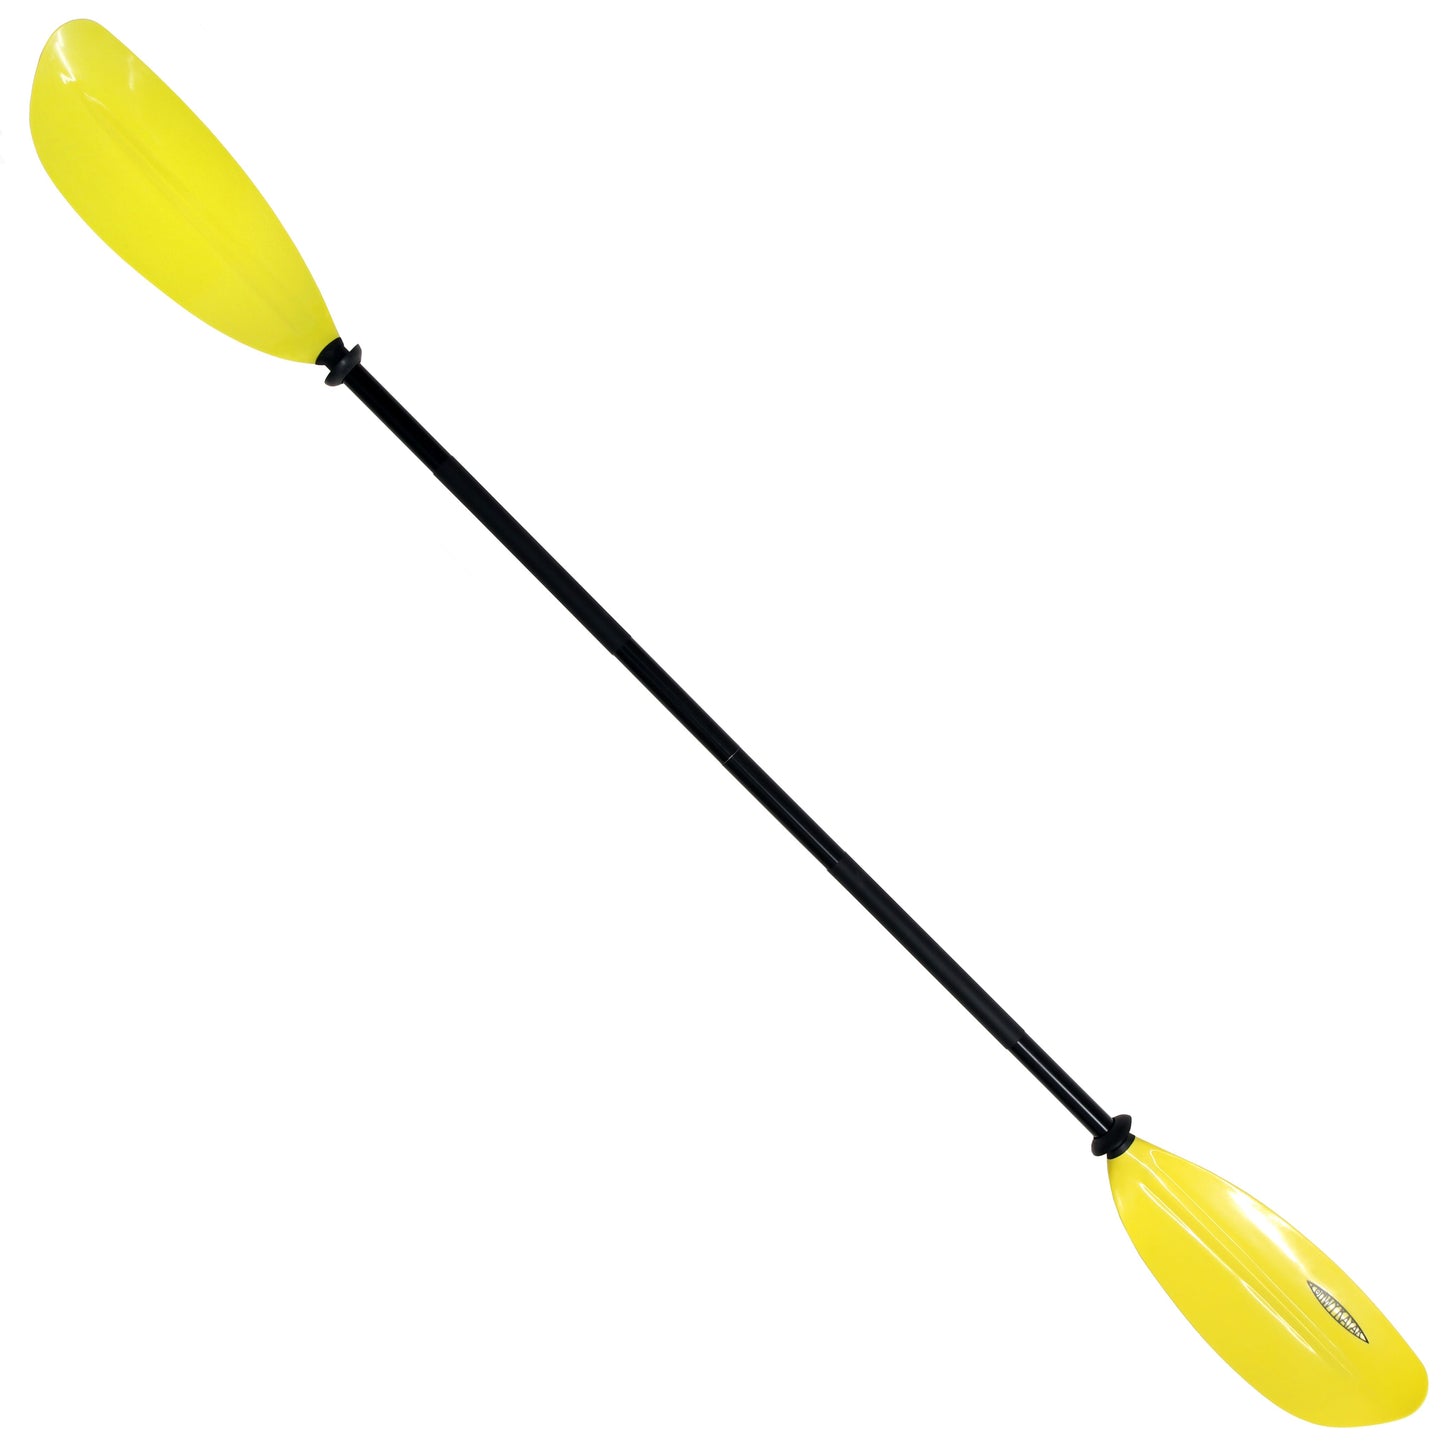 Conwy Kayak - Yellow 2 Piece Aluminium Kayak Paddle - 12